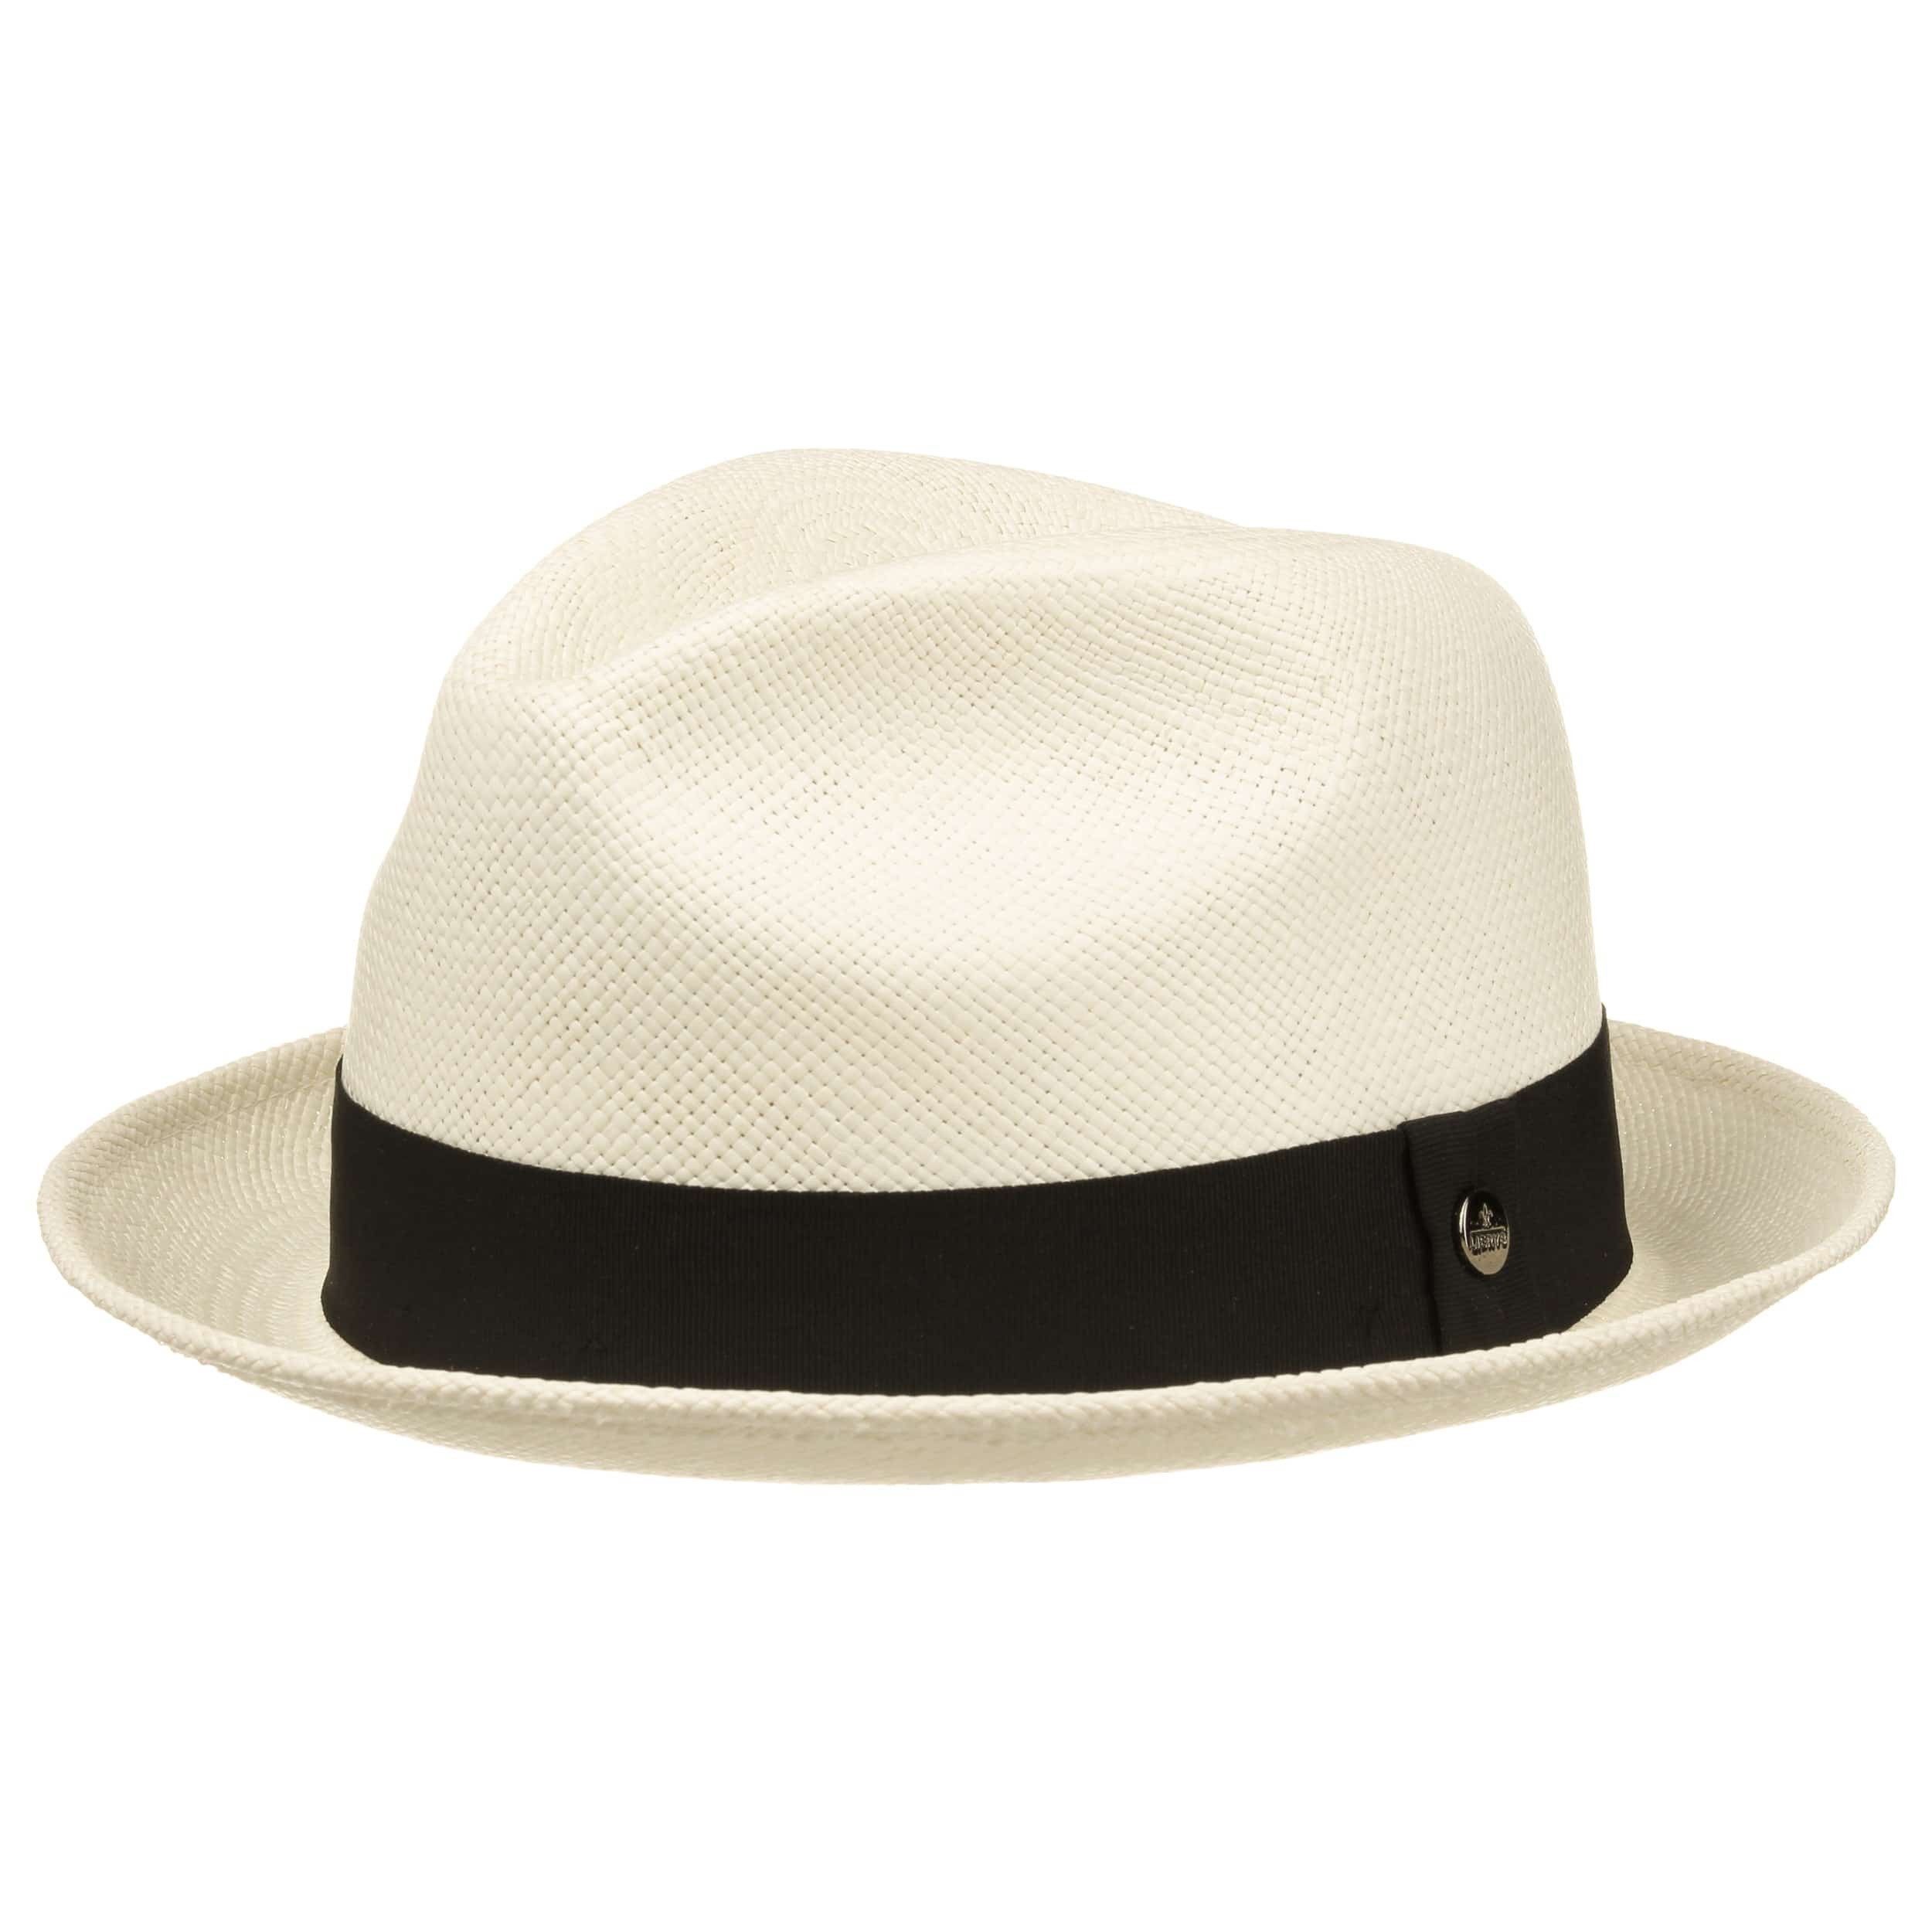 Eduardo Player Panama Hat by Lierys - 75,95